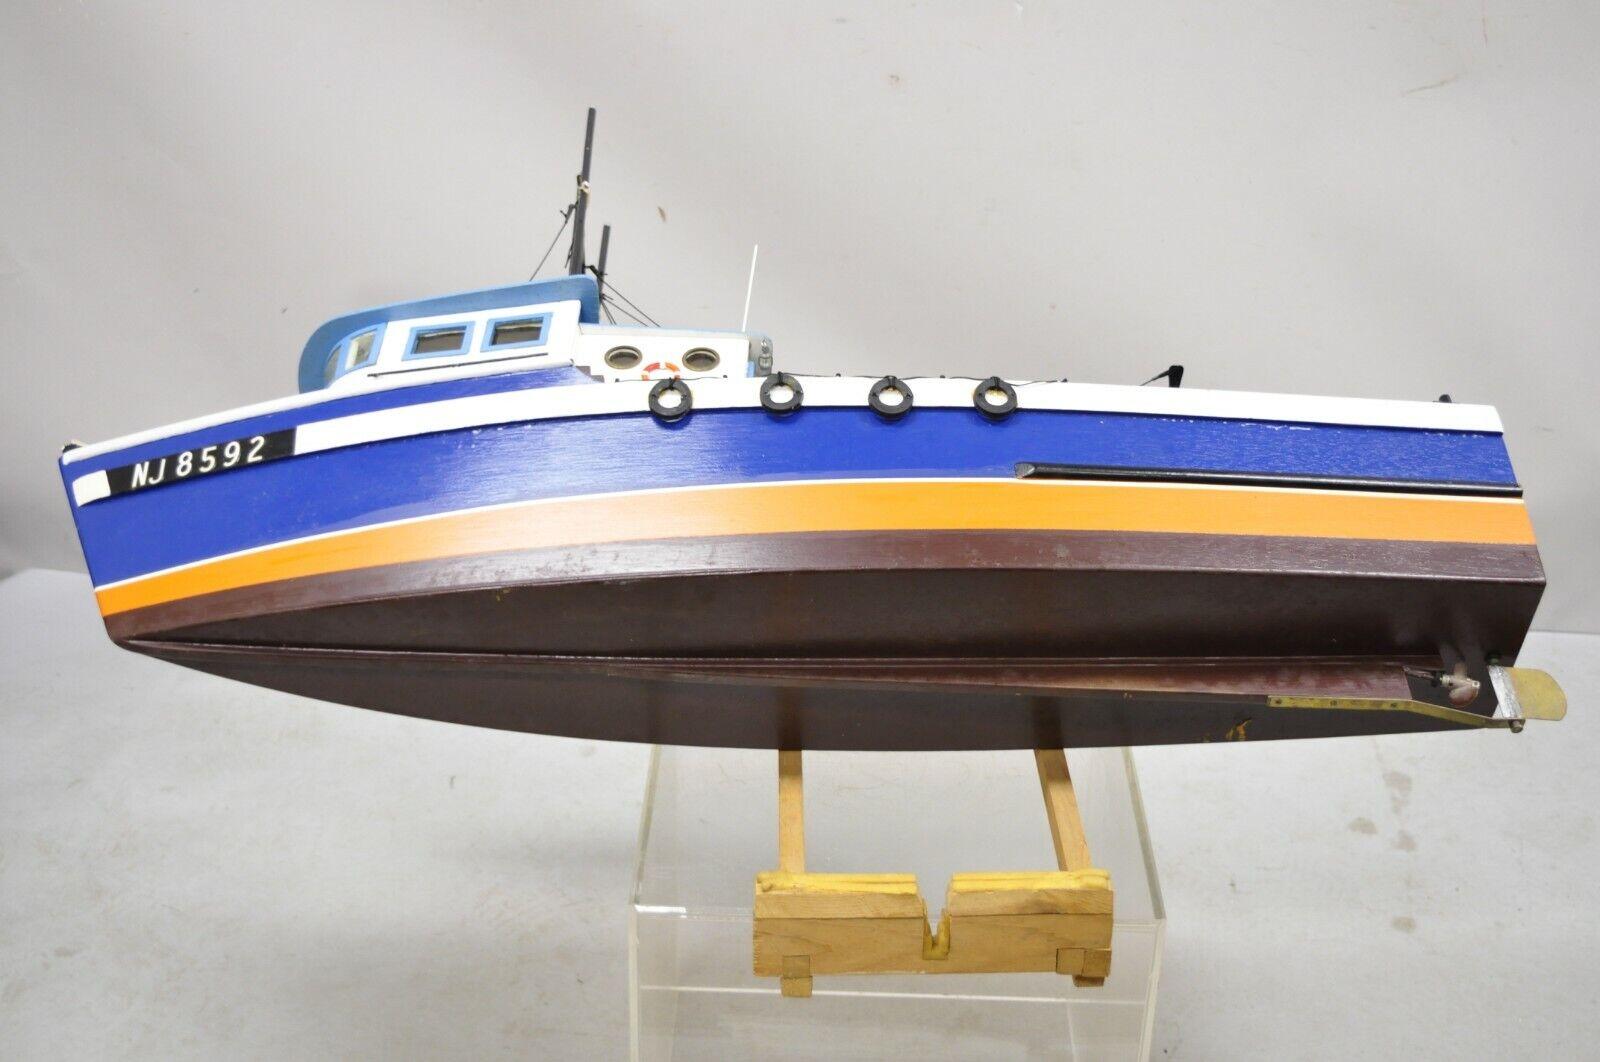 Wood Vintage Fishing Boat Ship Model a, Rab NJ 8592 For Sale